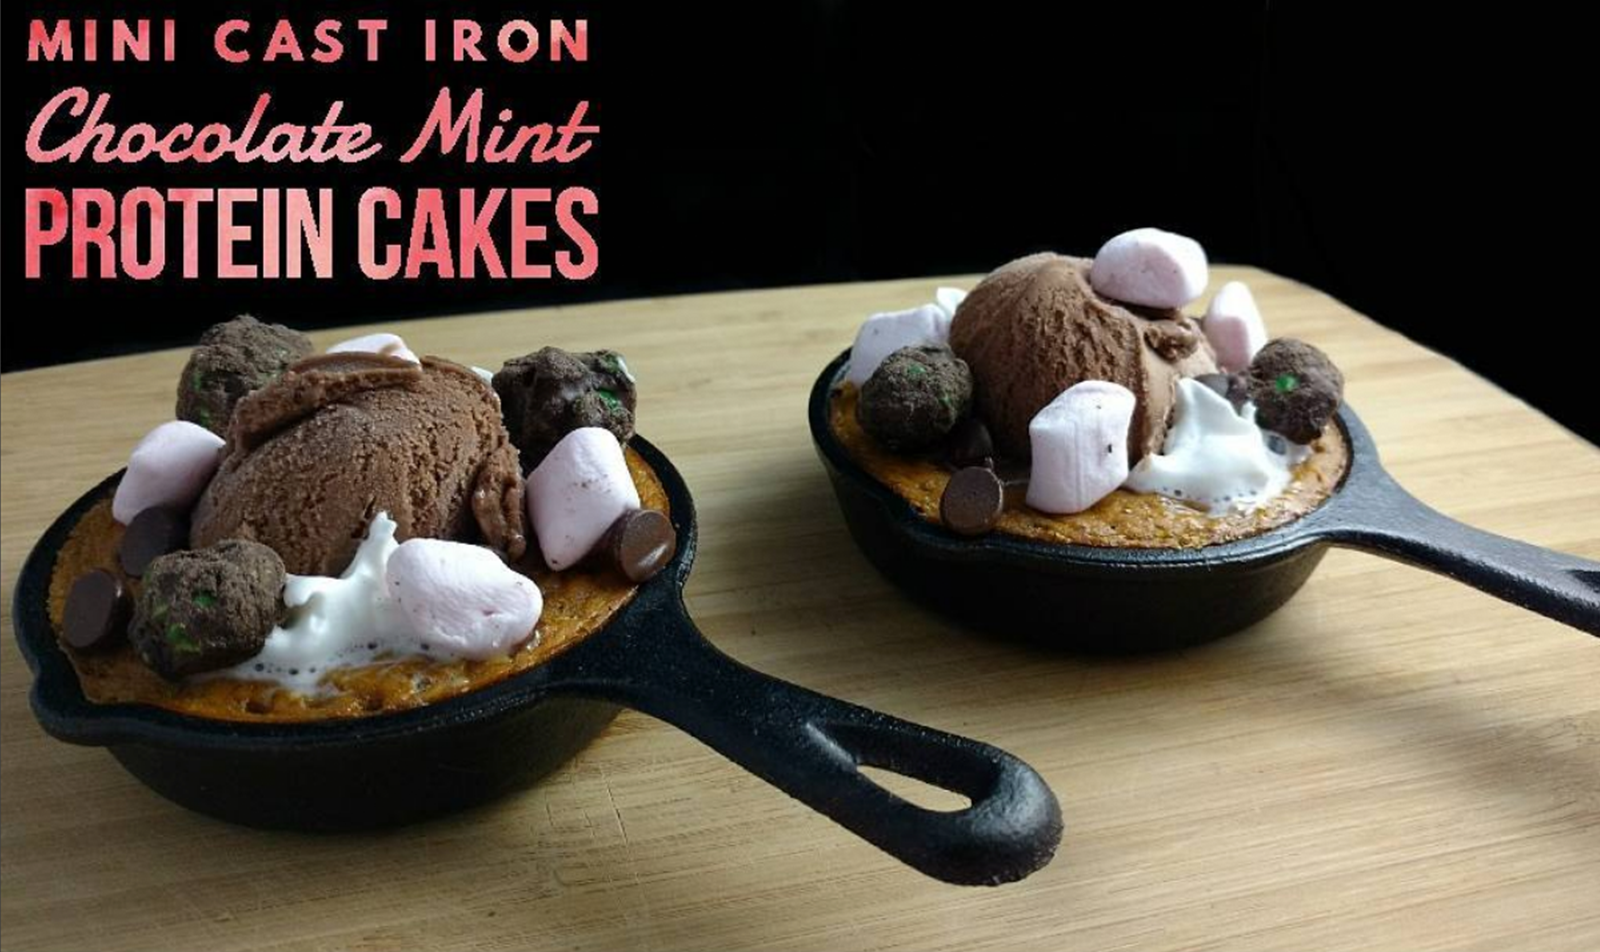 Mini Cast Iron Chocolate Mint Protein Cakes